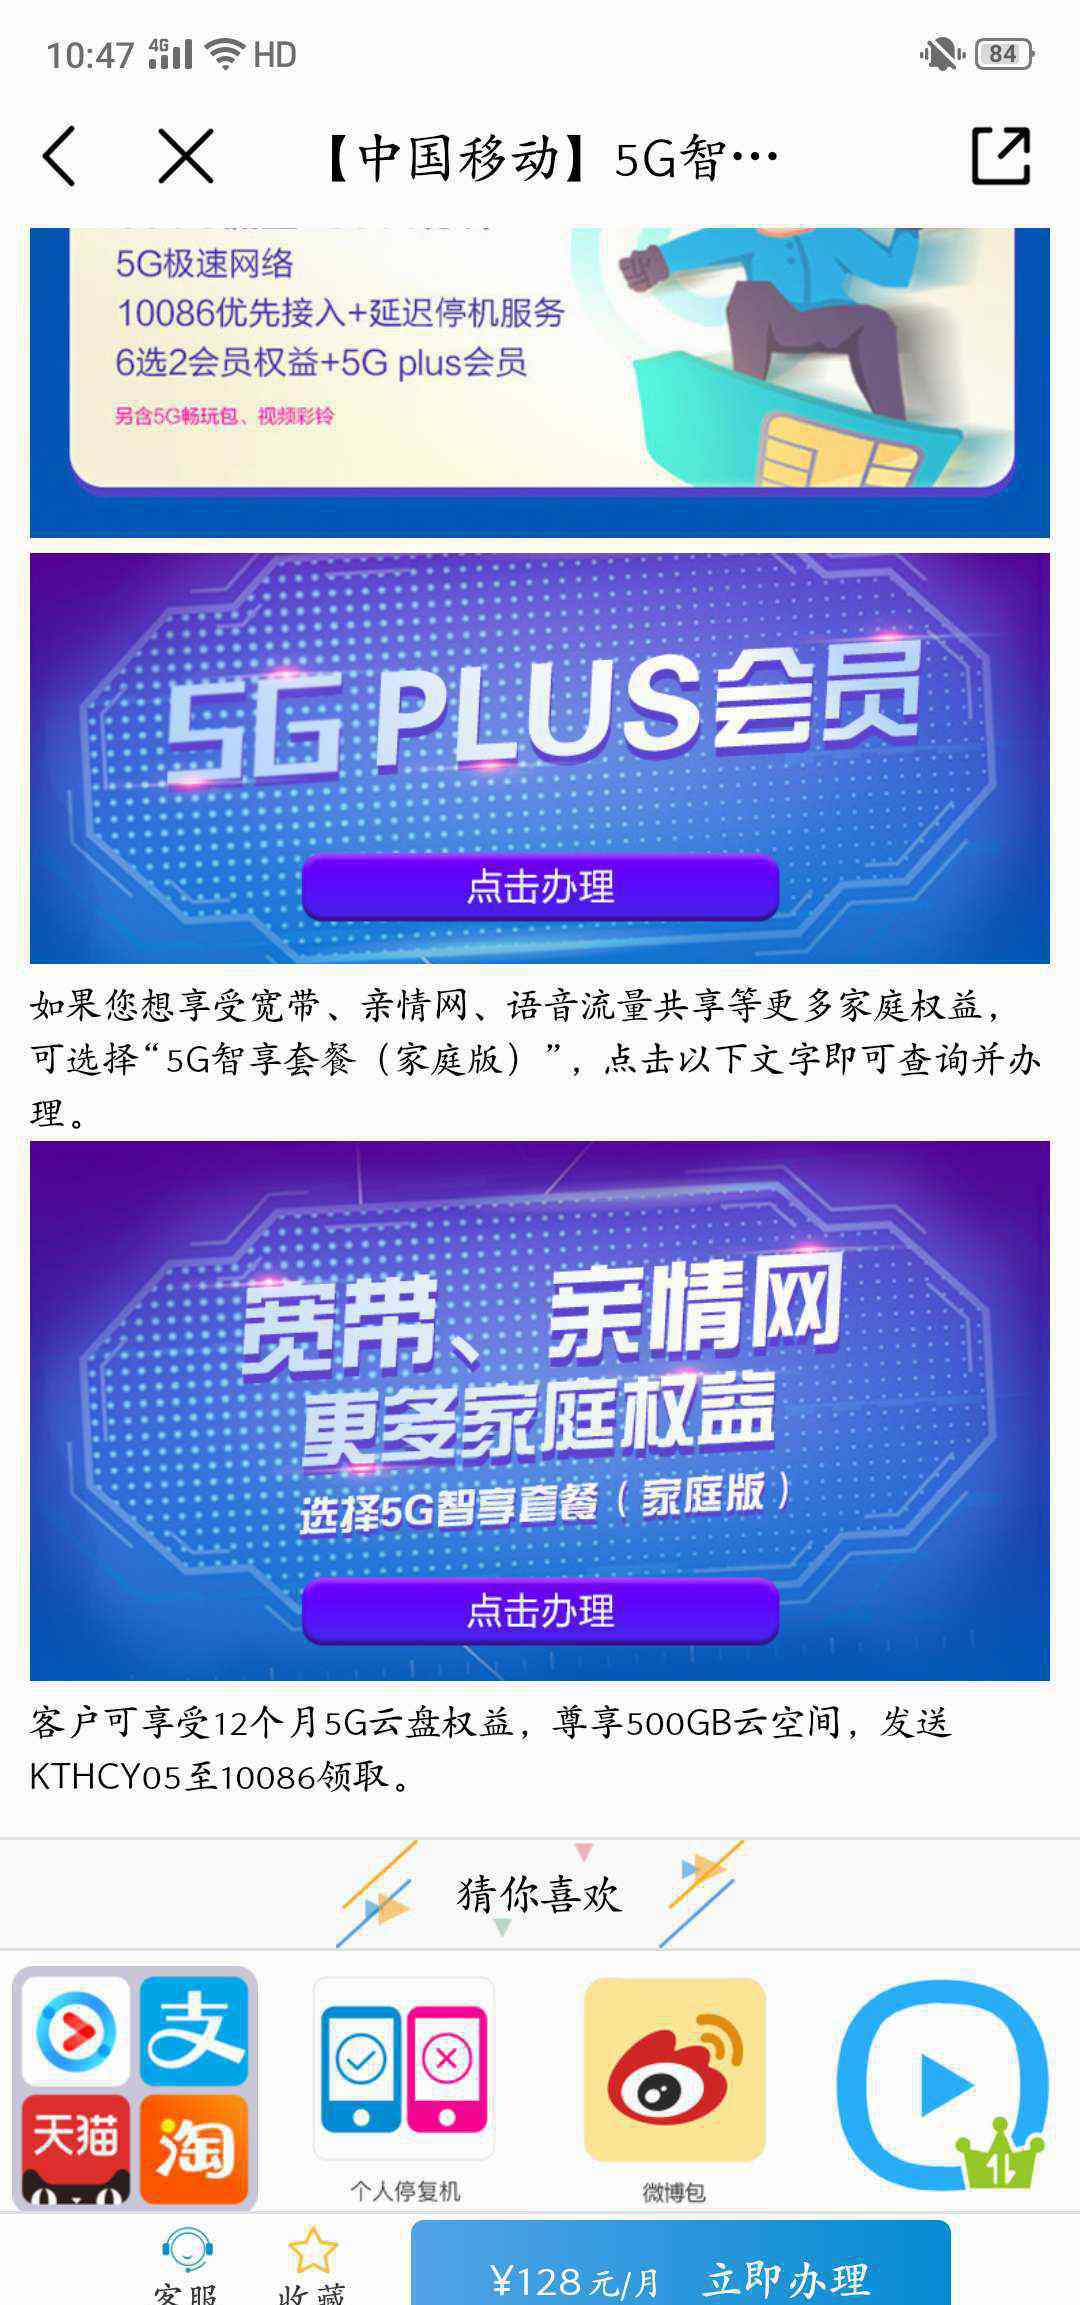 50g 中国移动20周年感恩回馈，用户凭网龄可领50G流量与多重权益！